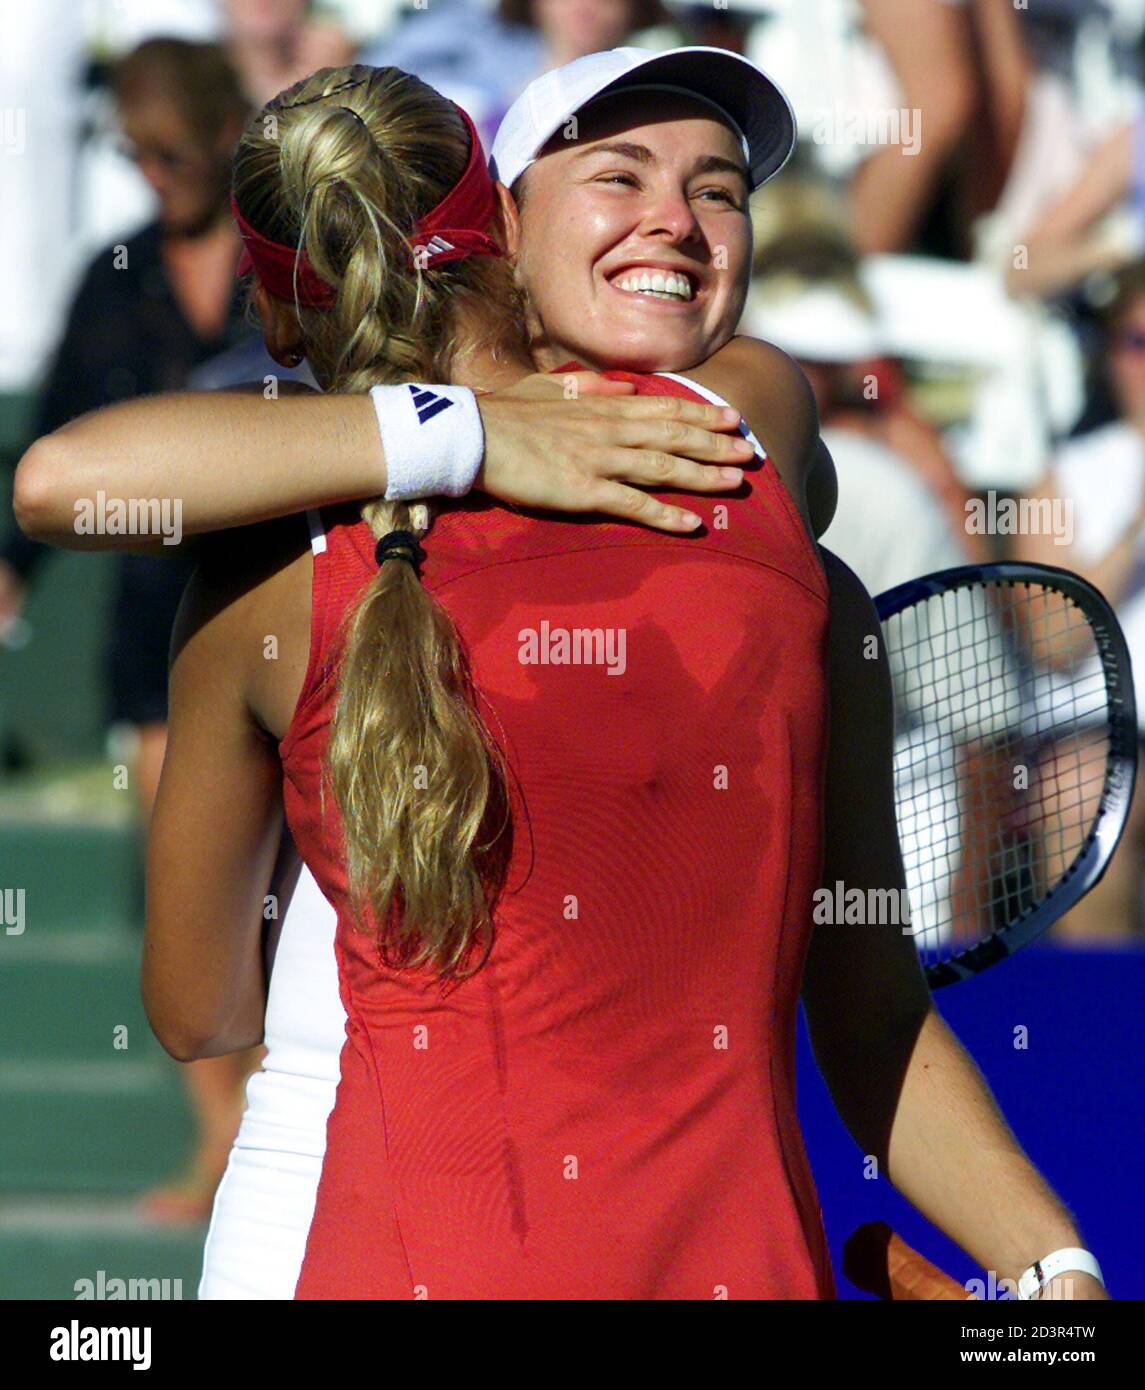 Tennis kournikova hingis hi-res stock photography and images - Page 5 -  Alamy